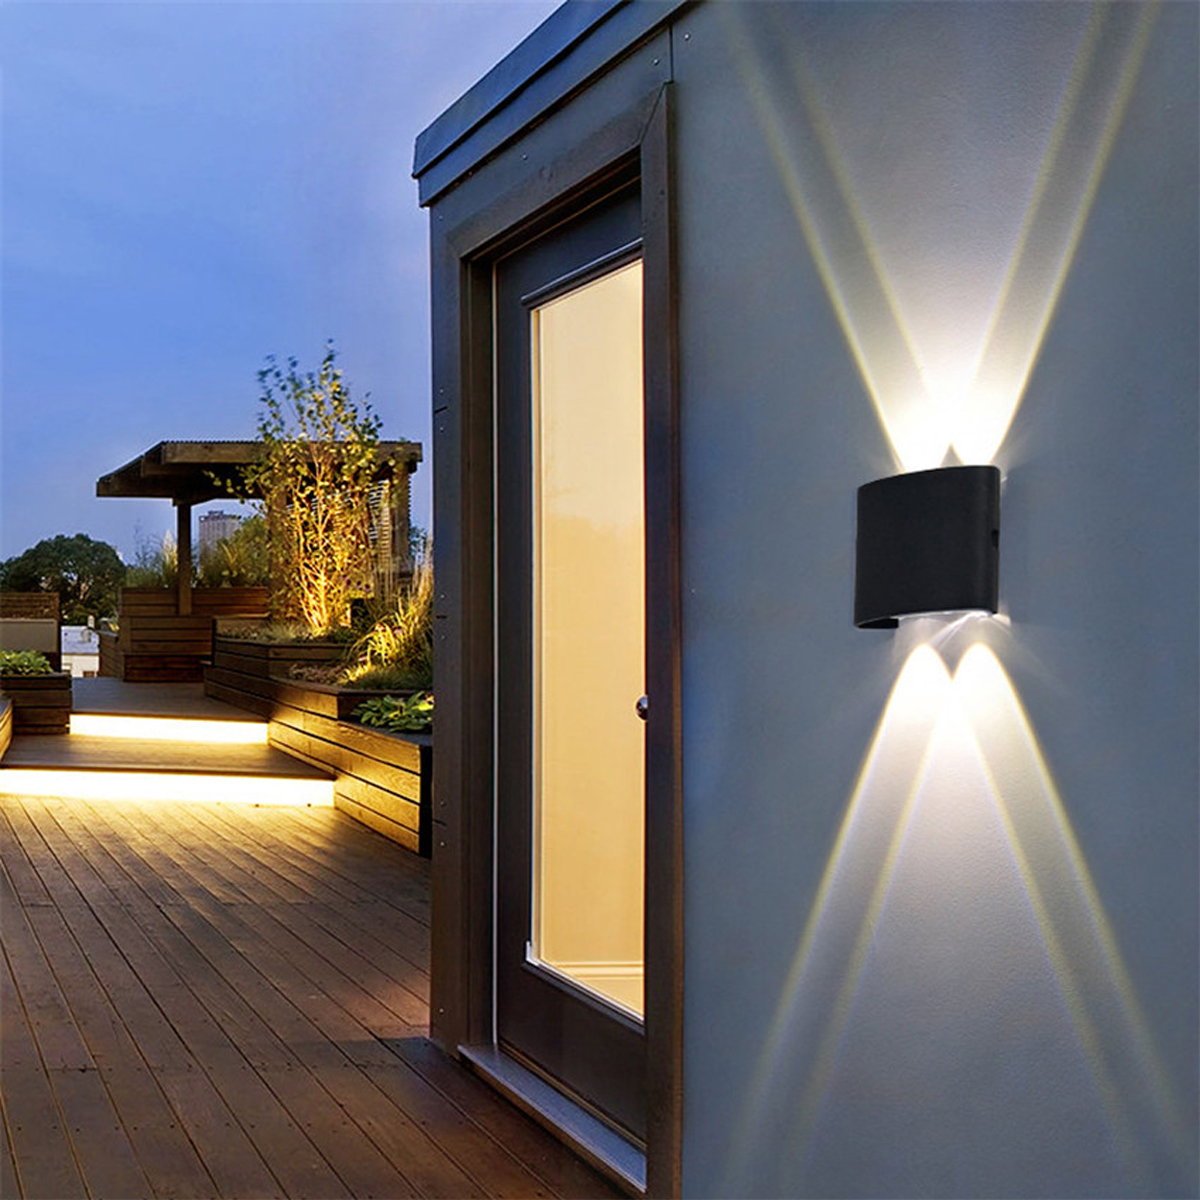 Waterproof-2-8W-LED-Wall-Light-Up-Down-Lighting-Sconce-Lamp-Indoor-Outdoor-IP65-1850910-13